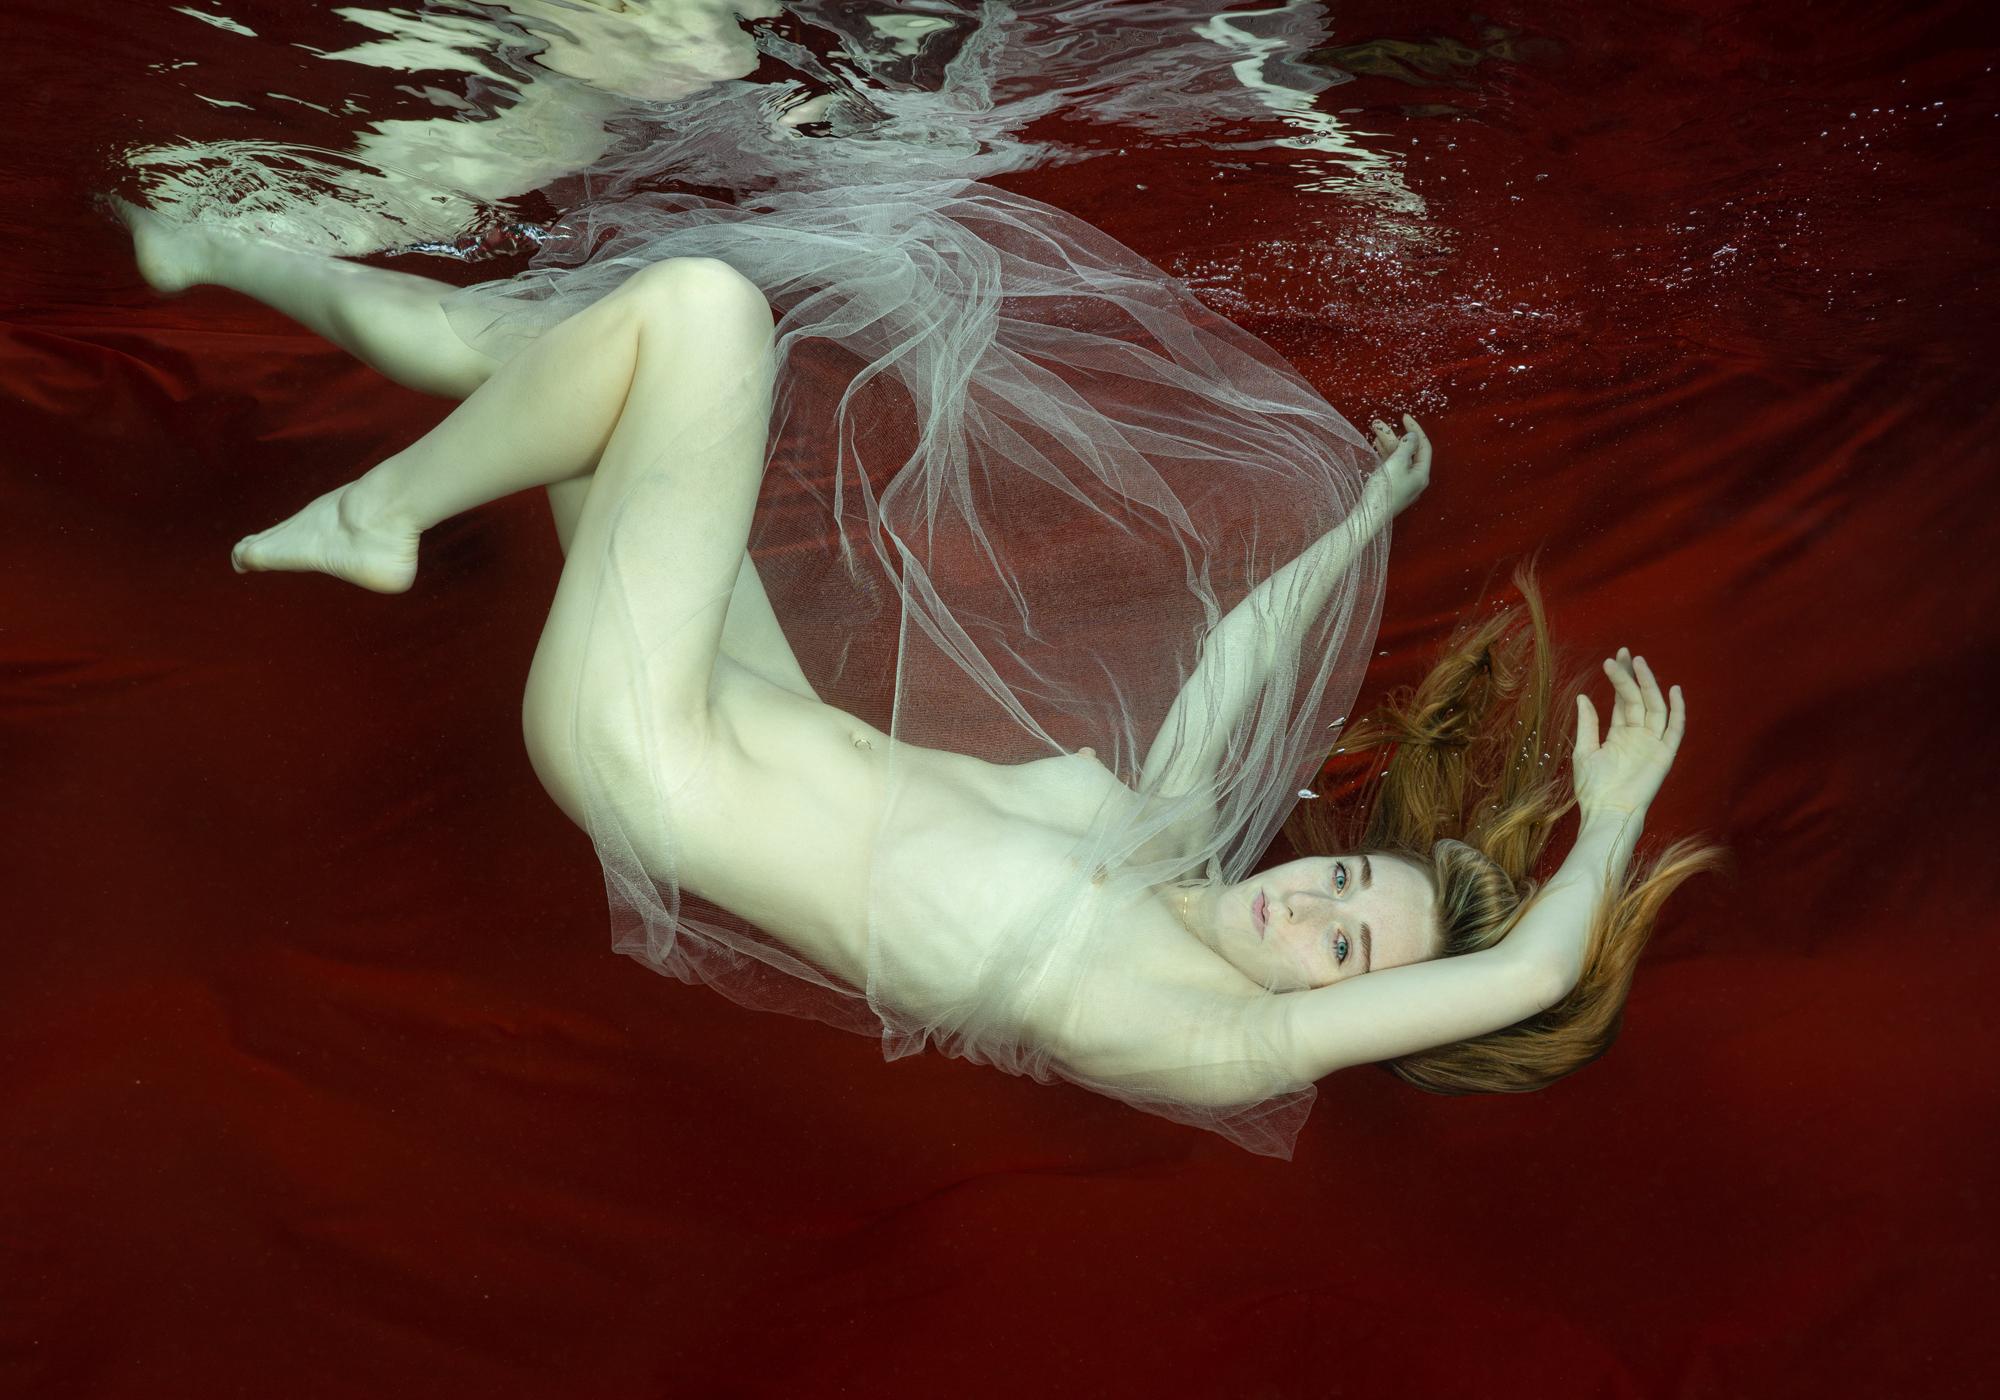 Alex Sher Nude Photograph - Die Loreley - underwater nude photograph - archival pigment print